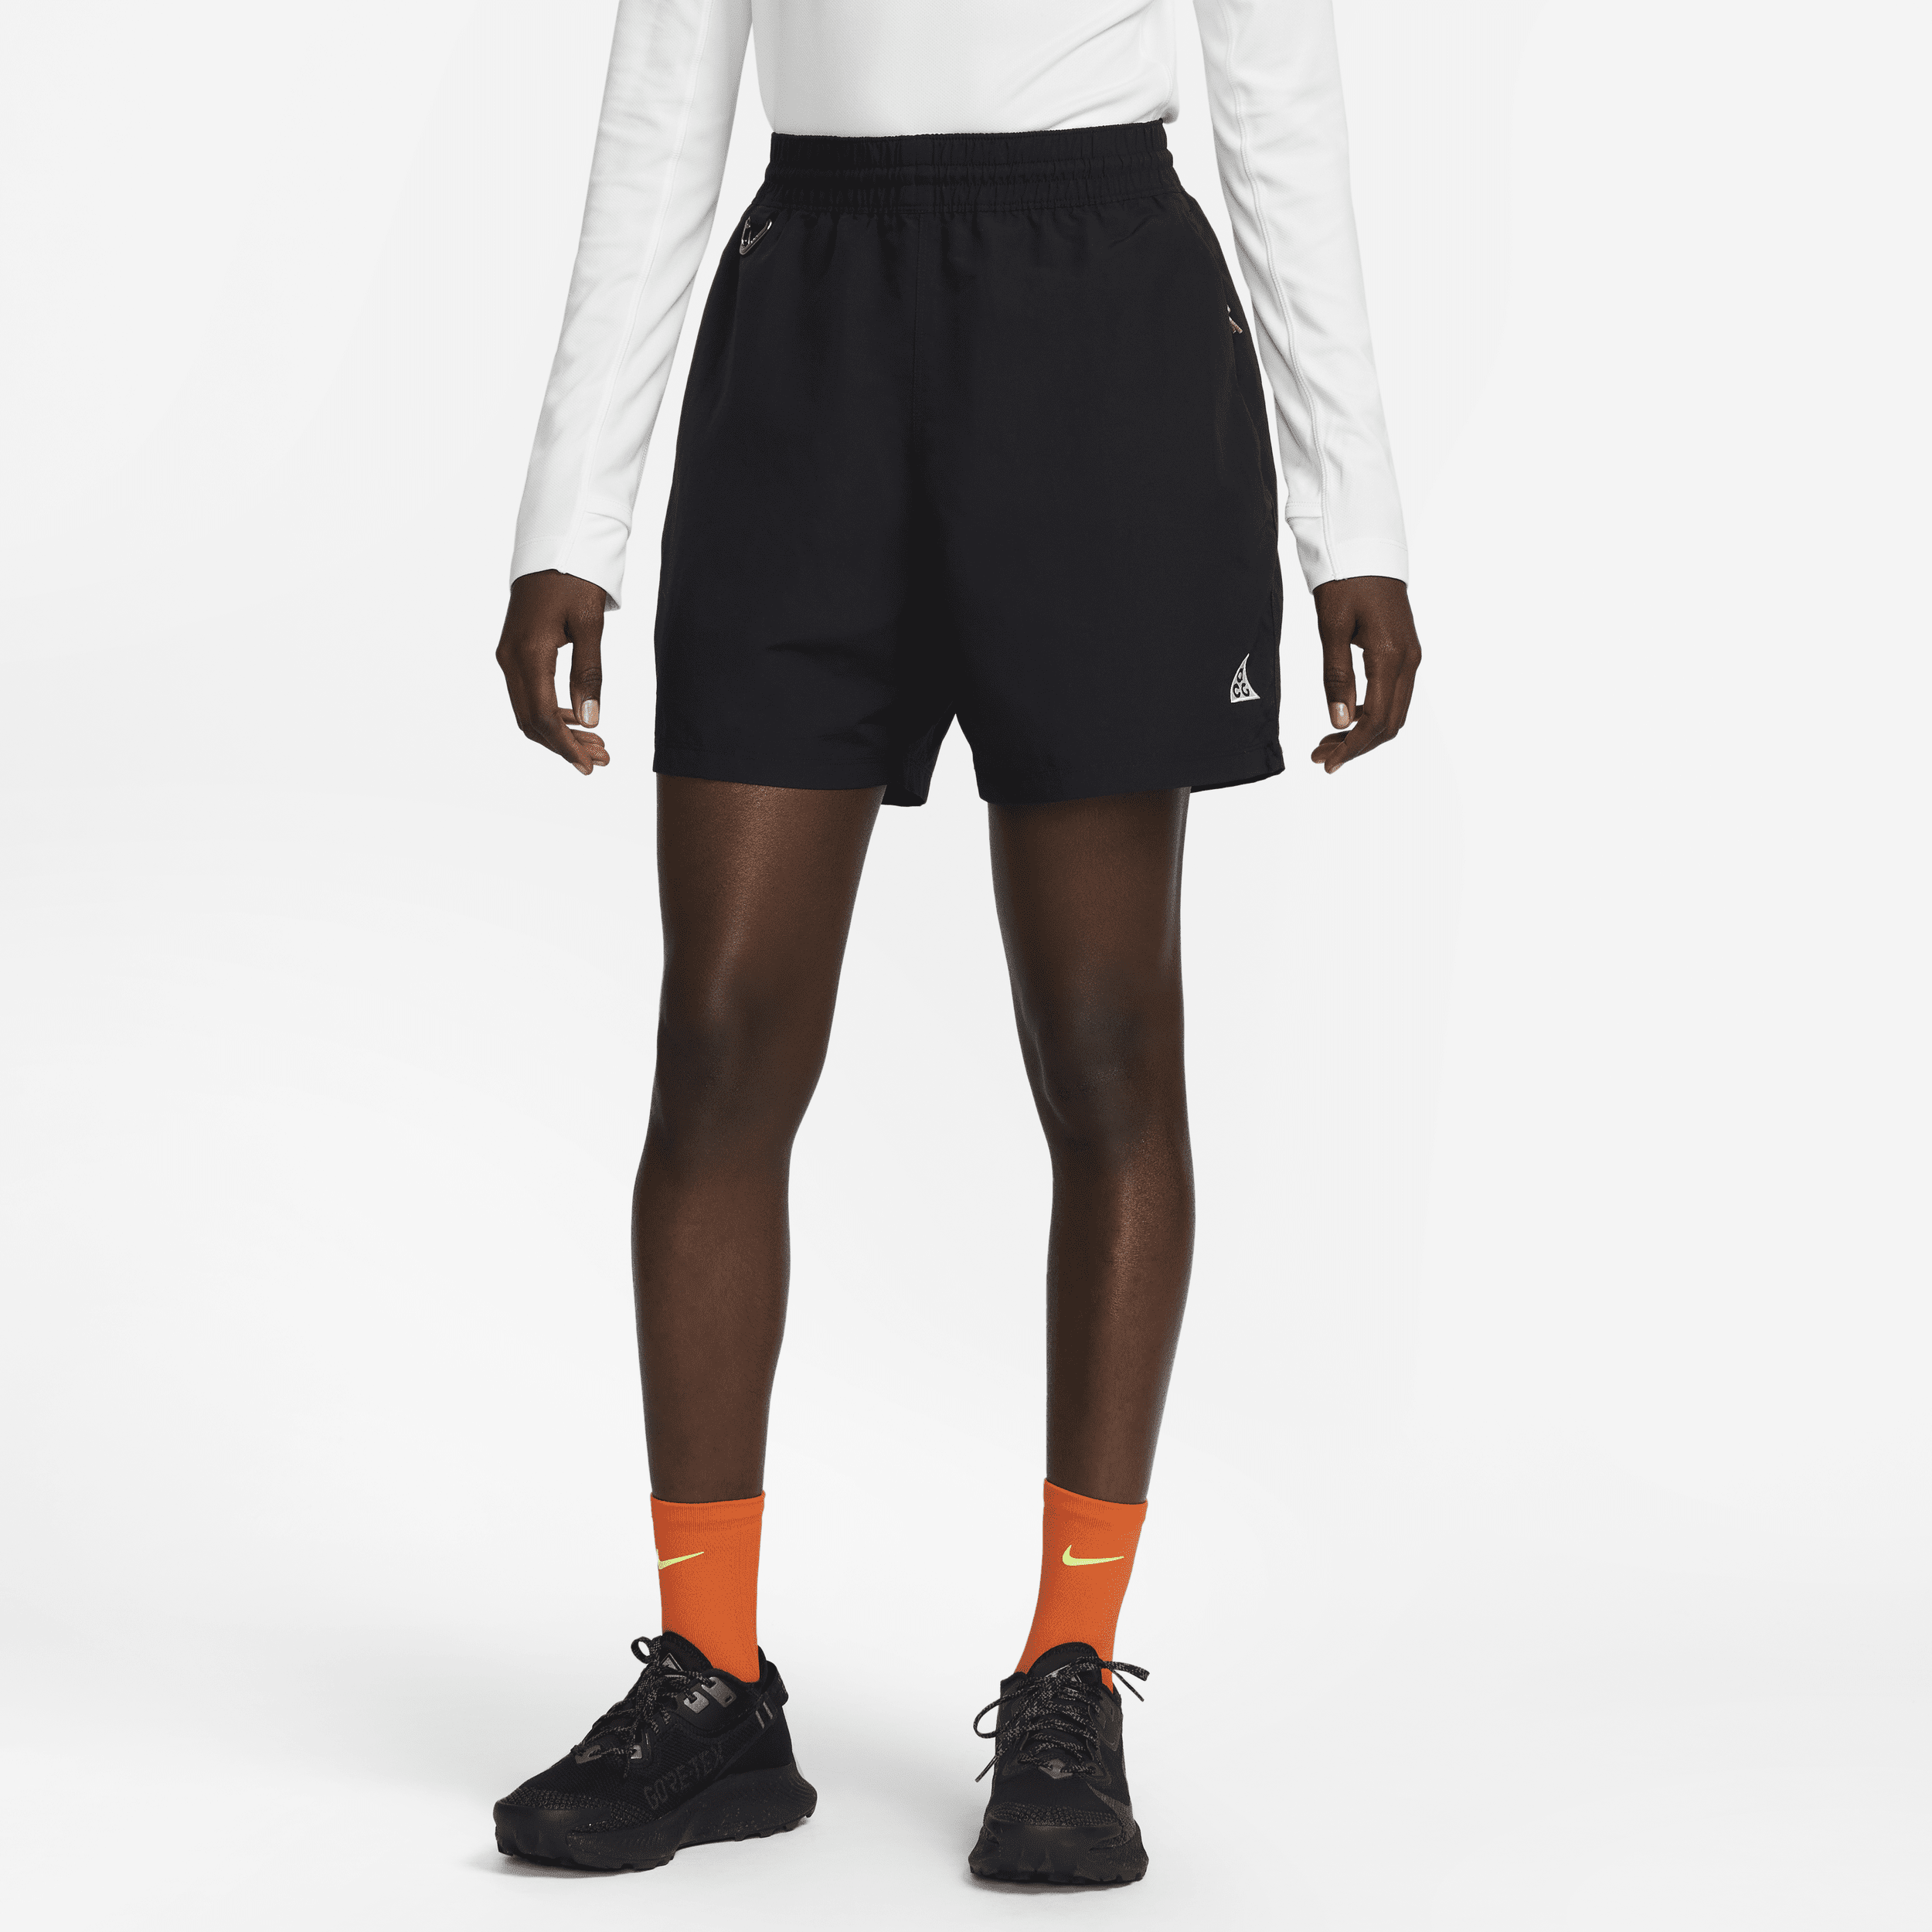 Shorts 13 cm Nike ACG – Donna - Nero